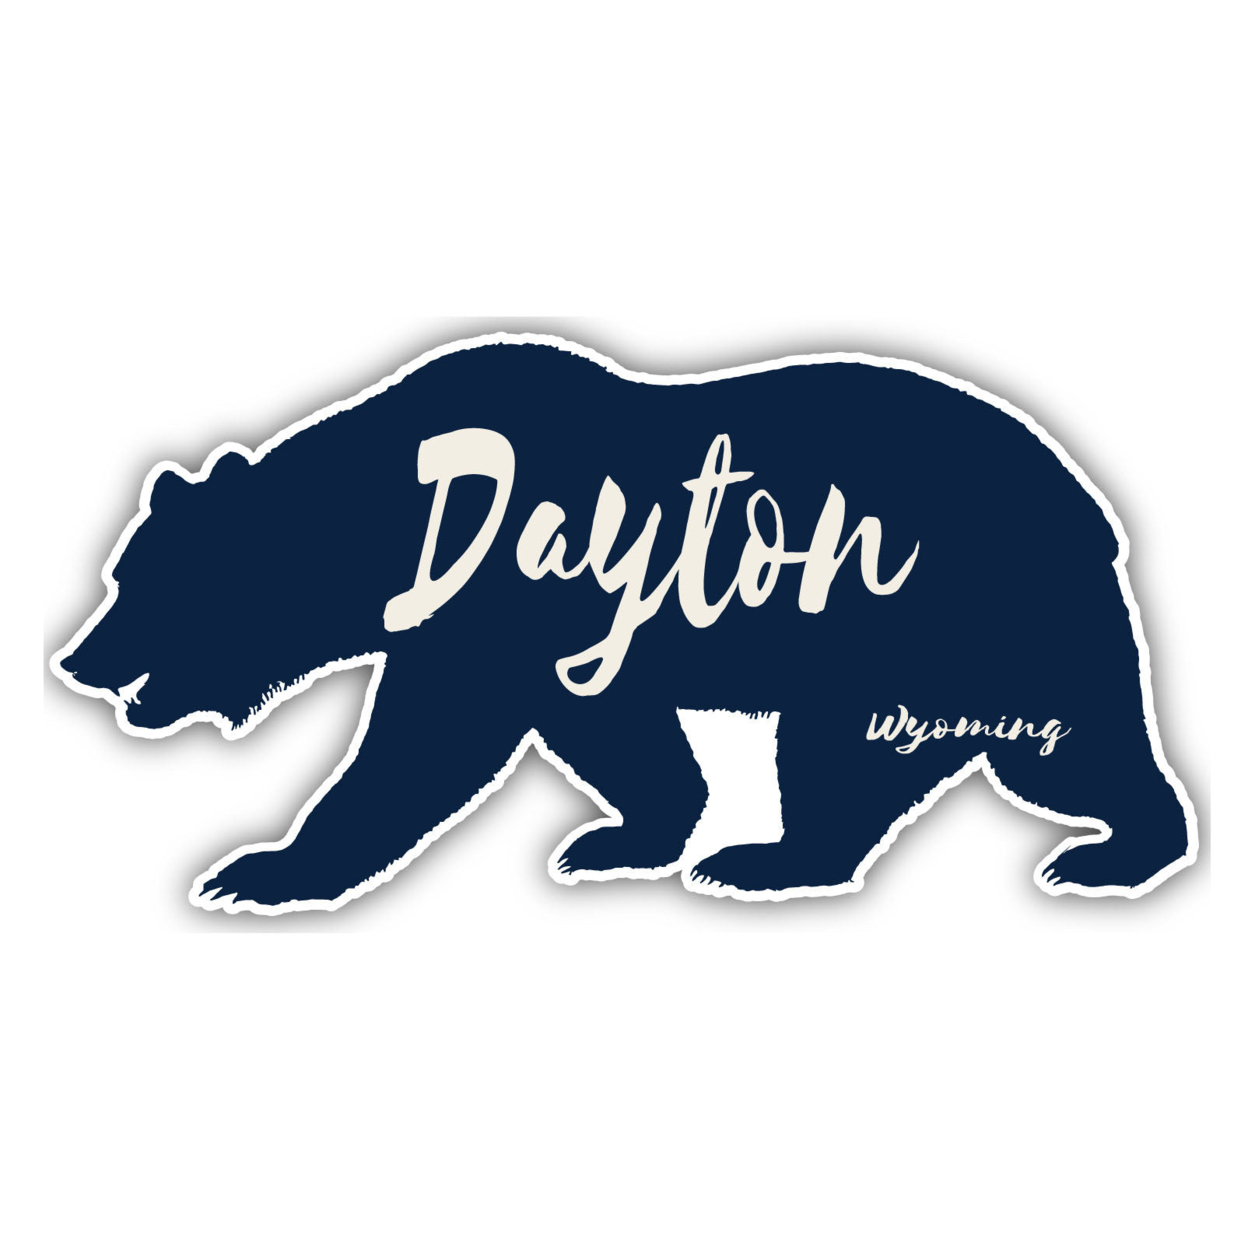 Dayton Wyoming Souvenir Decorative Stickers (Choose Theme And Size) - Single Unit, 8-Inch, Bear